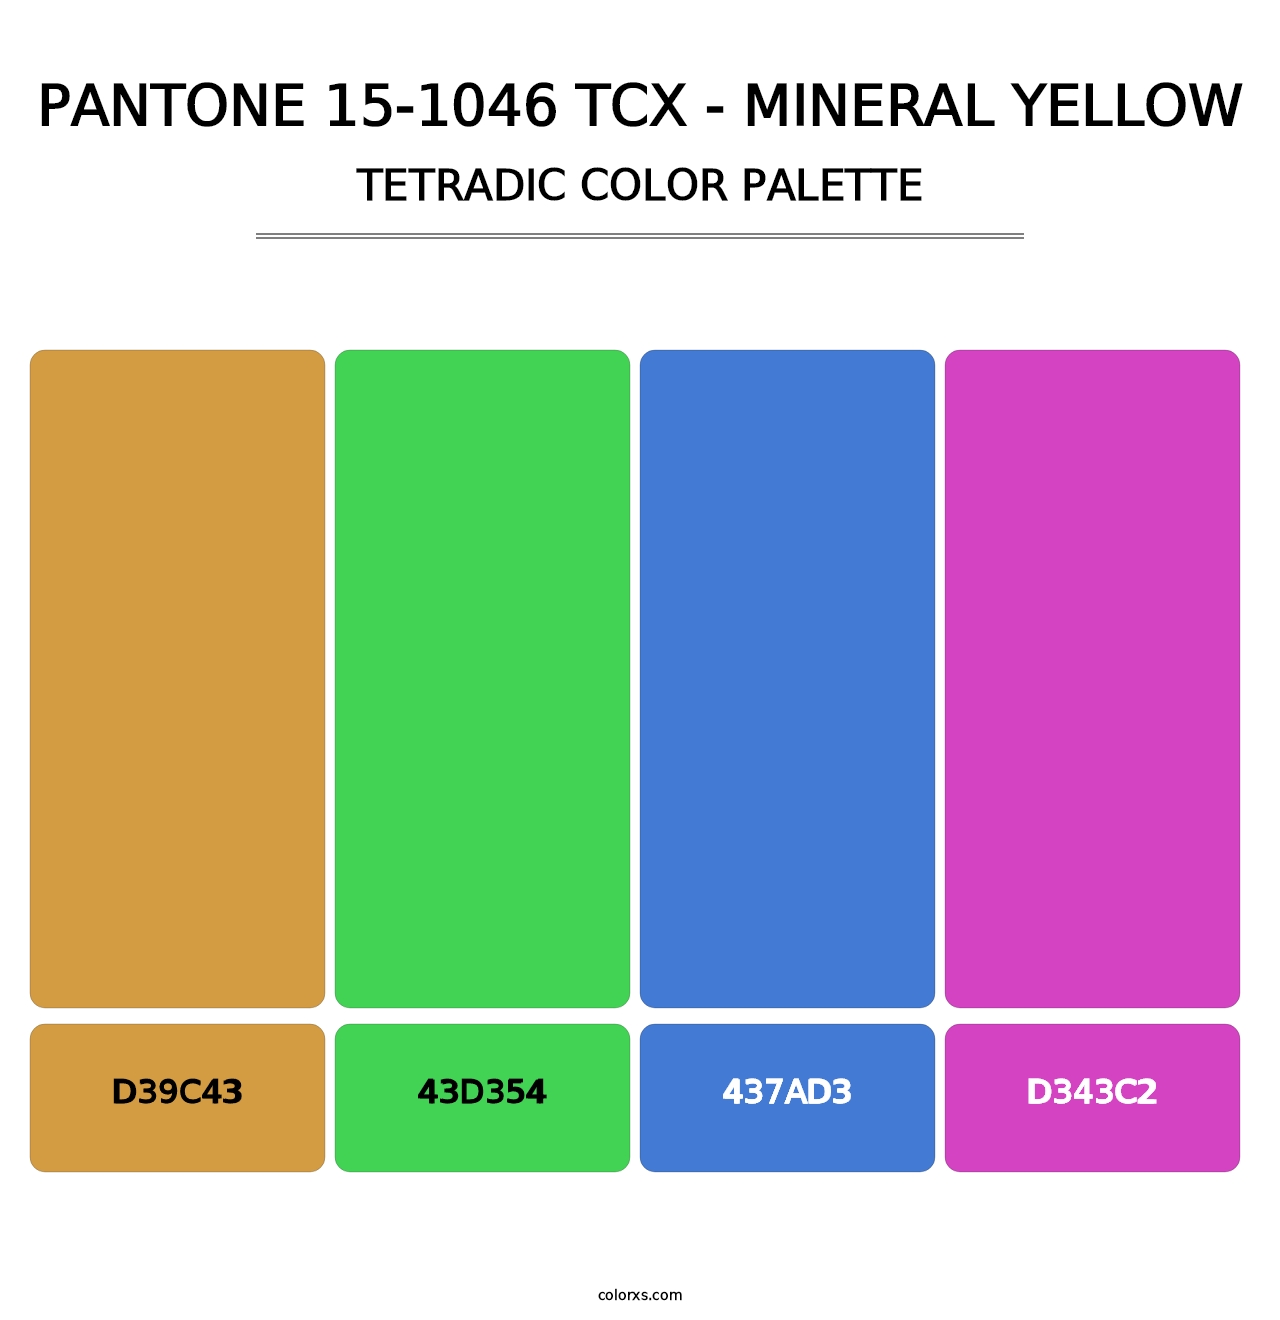 PANTONE 15-1046 TCX - Mineral Yellow - Tetradic Color Palette